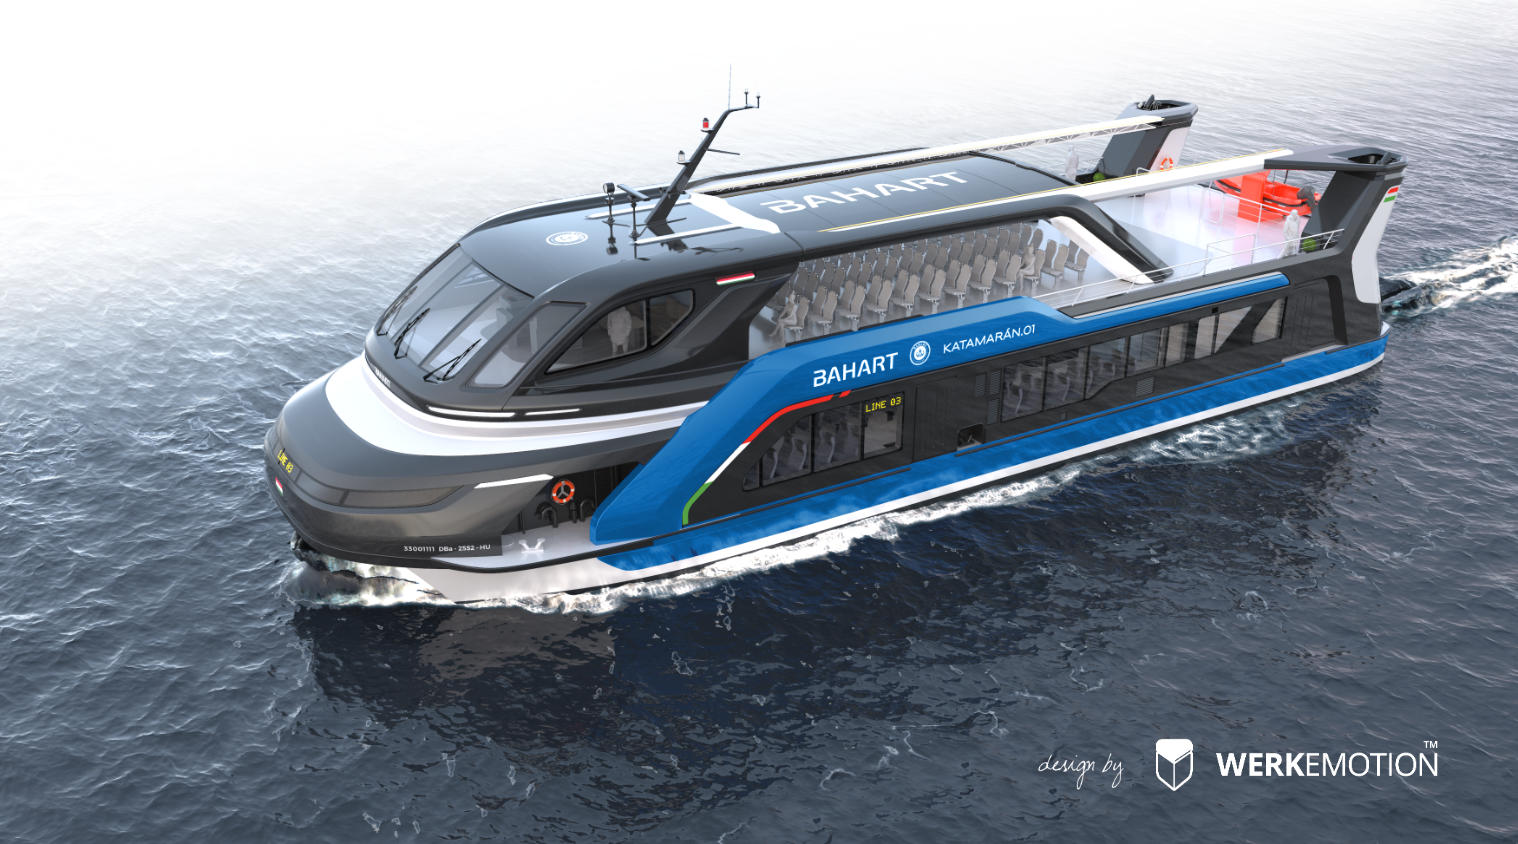 Bahart - New Catamaran for Balaton - design by WERKEMOTION